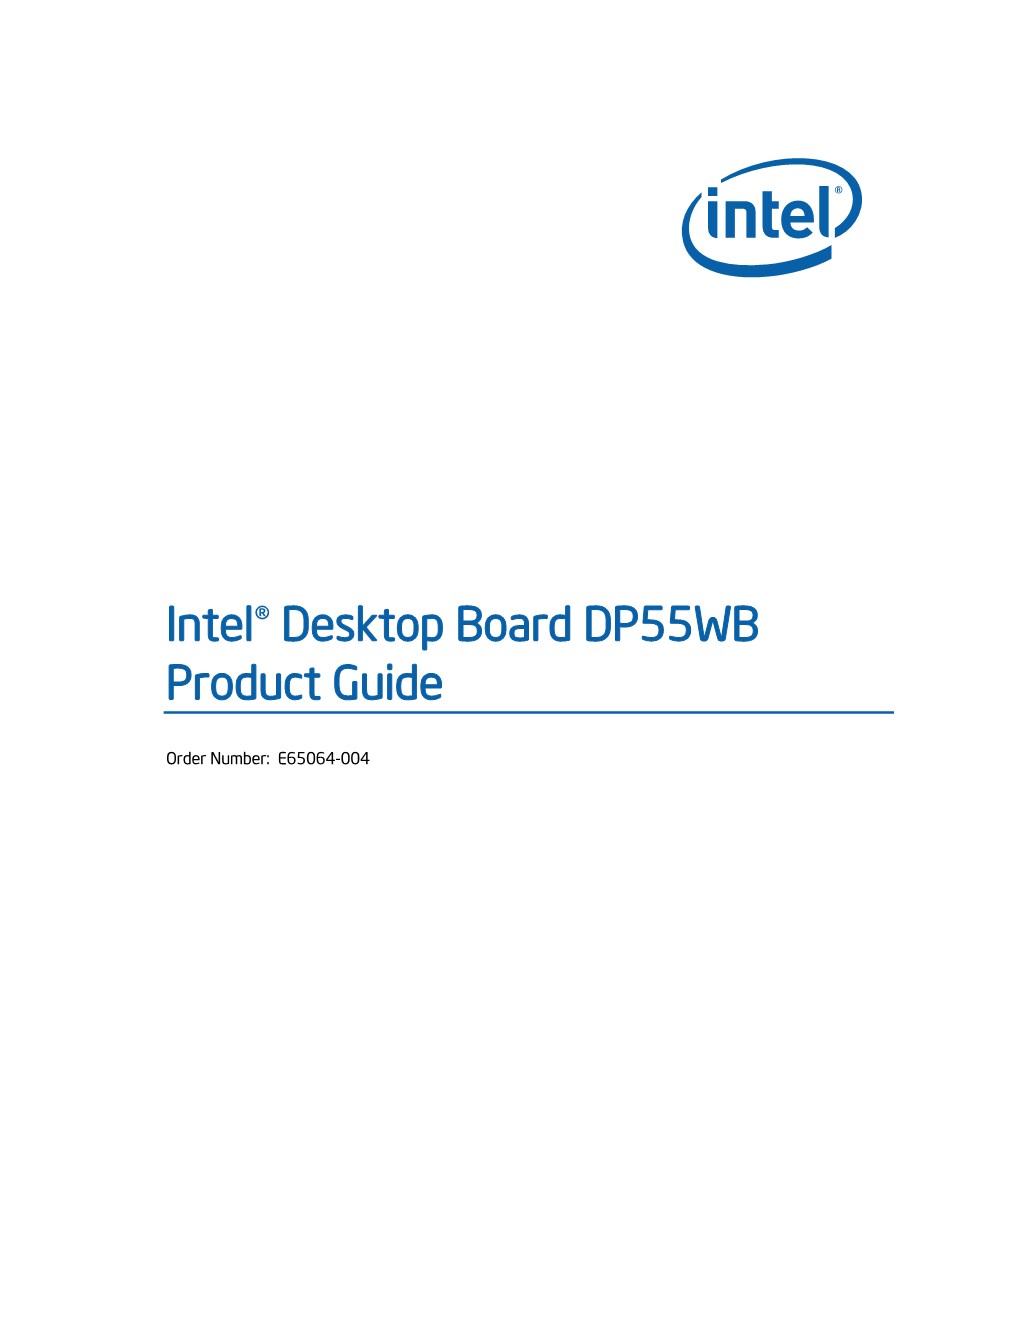 Intel® Desktop Board DP55WB Product Guide